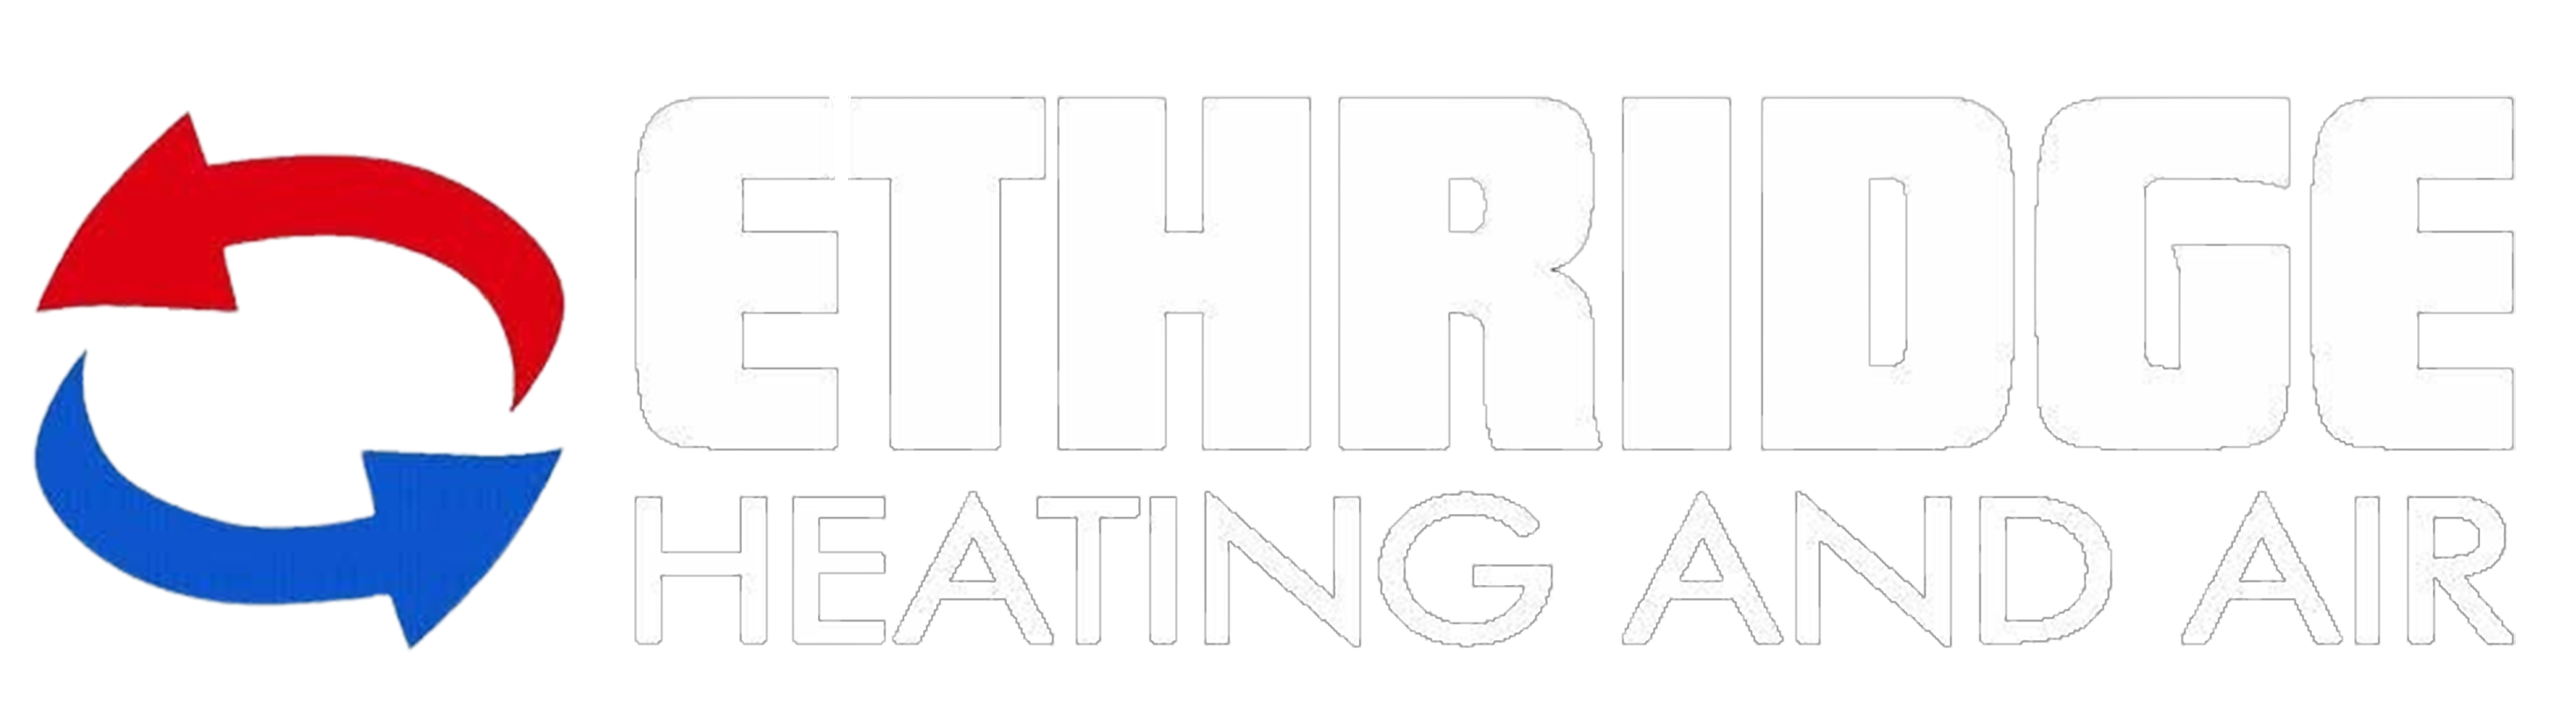 Ethridge Heating and Air logo